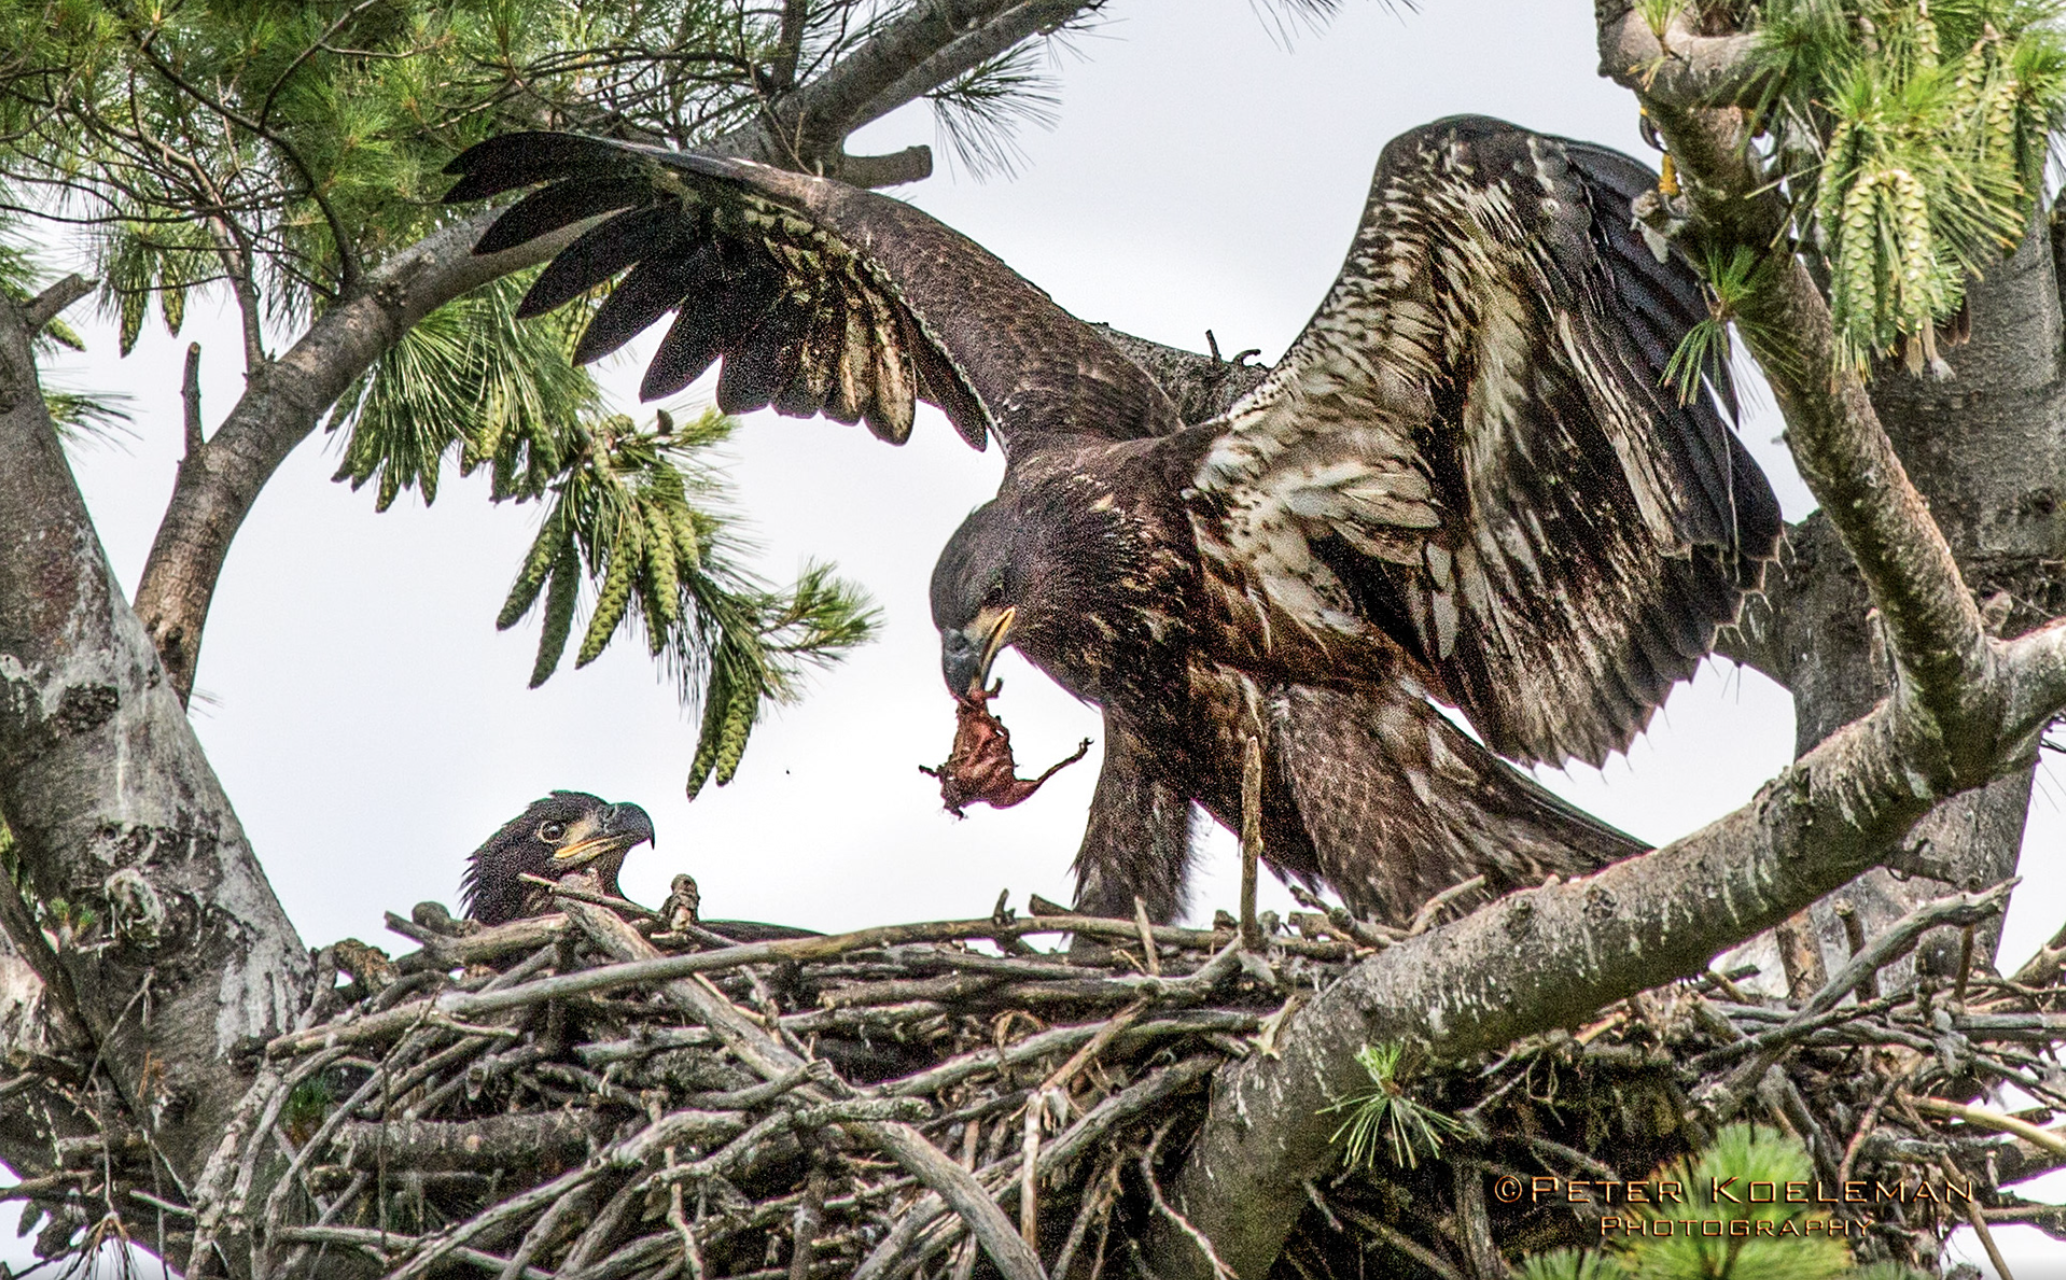 🦅 We’ve got an eaglet in the Dorman nest